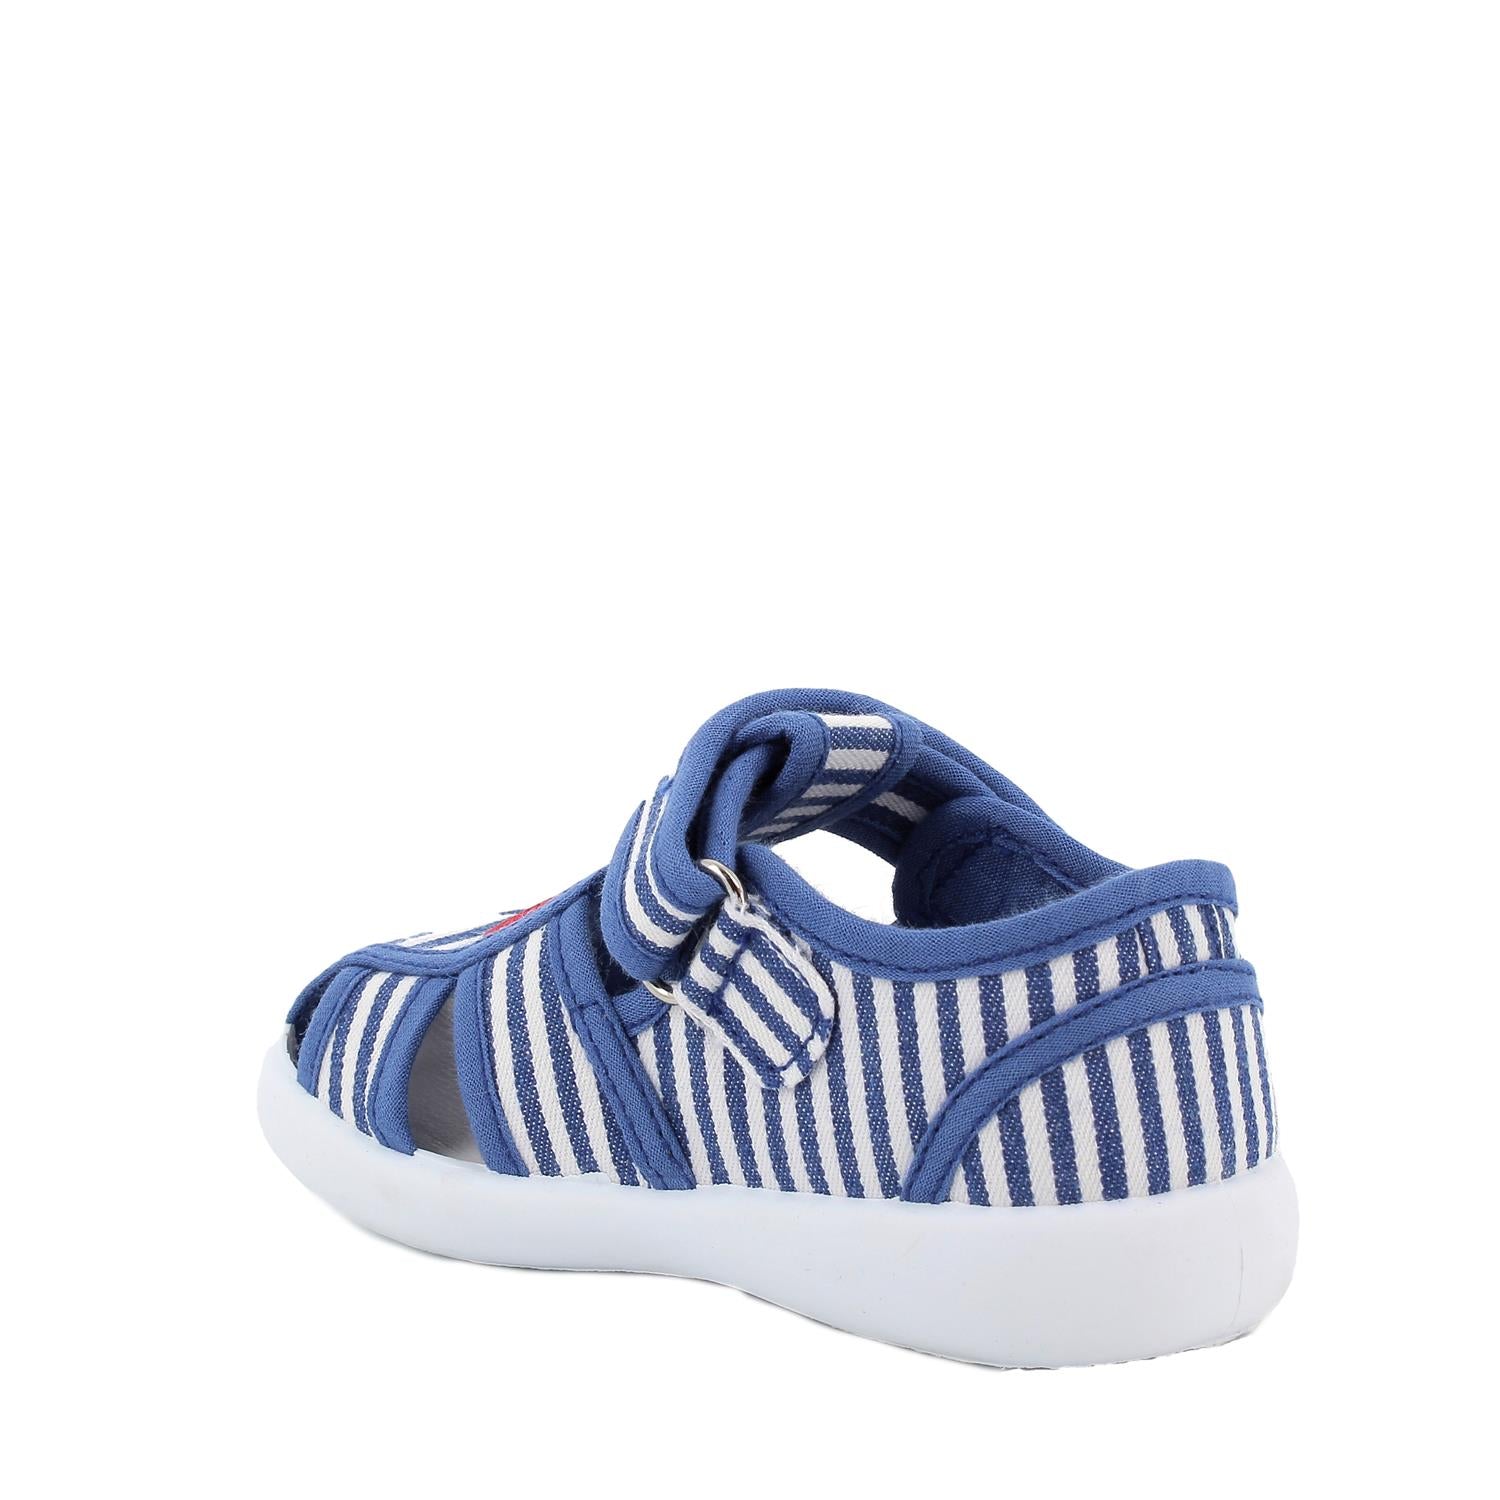 Primigi sandalo bimbo 3954300 bianco - azzurro